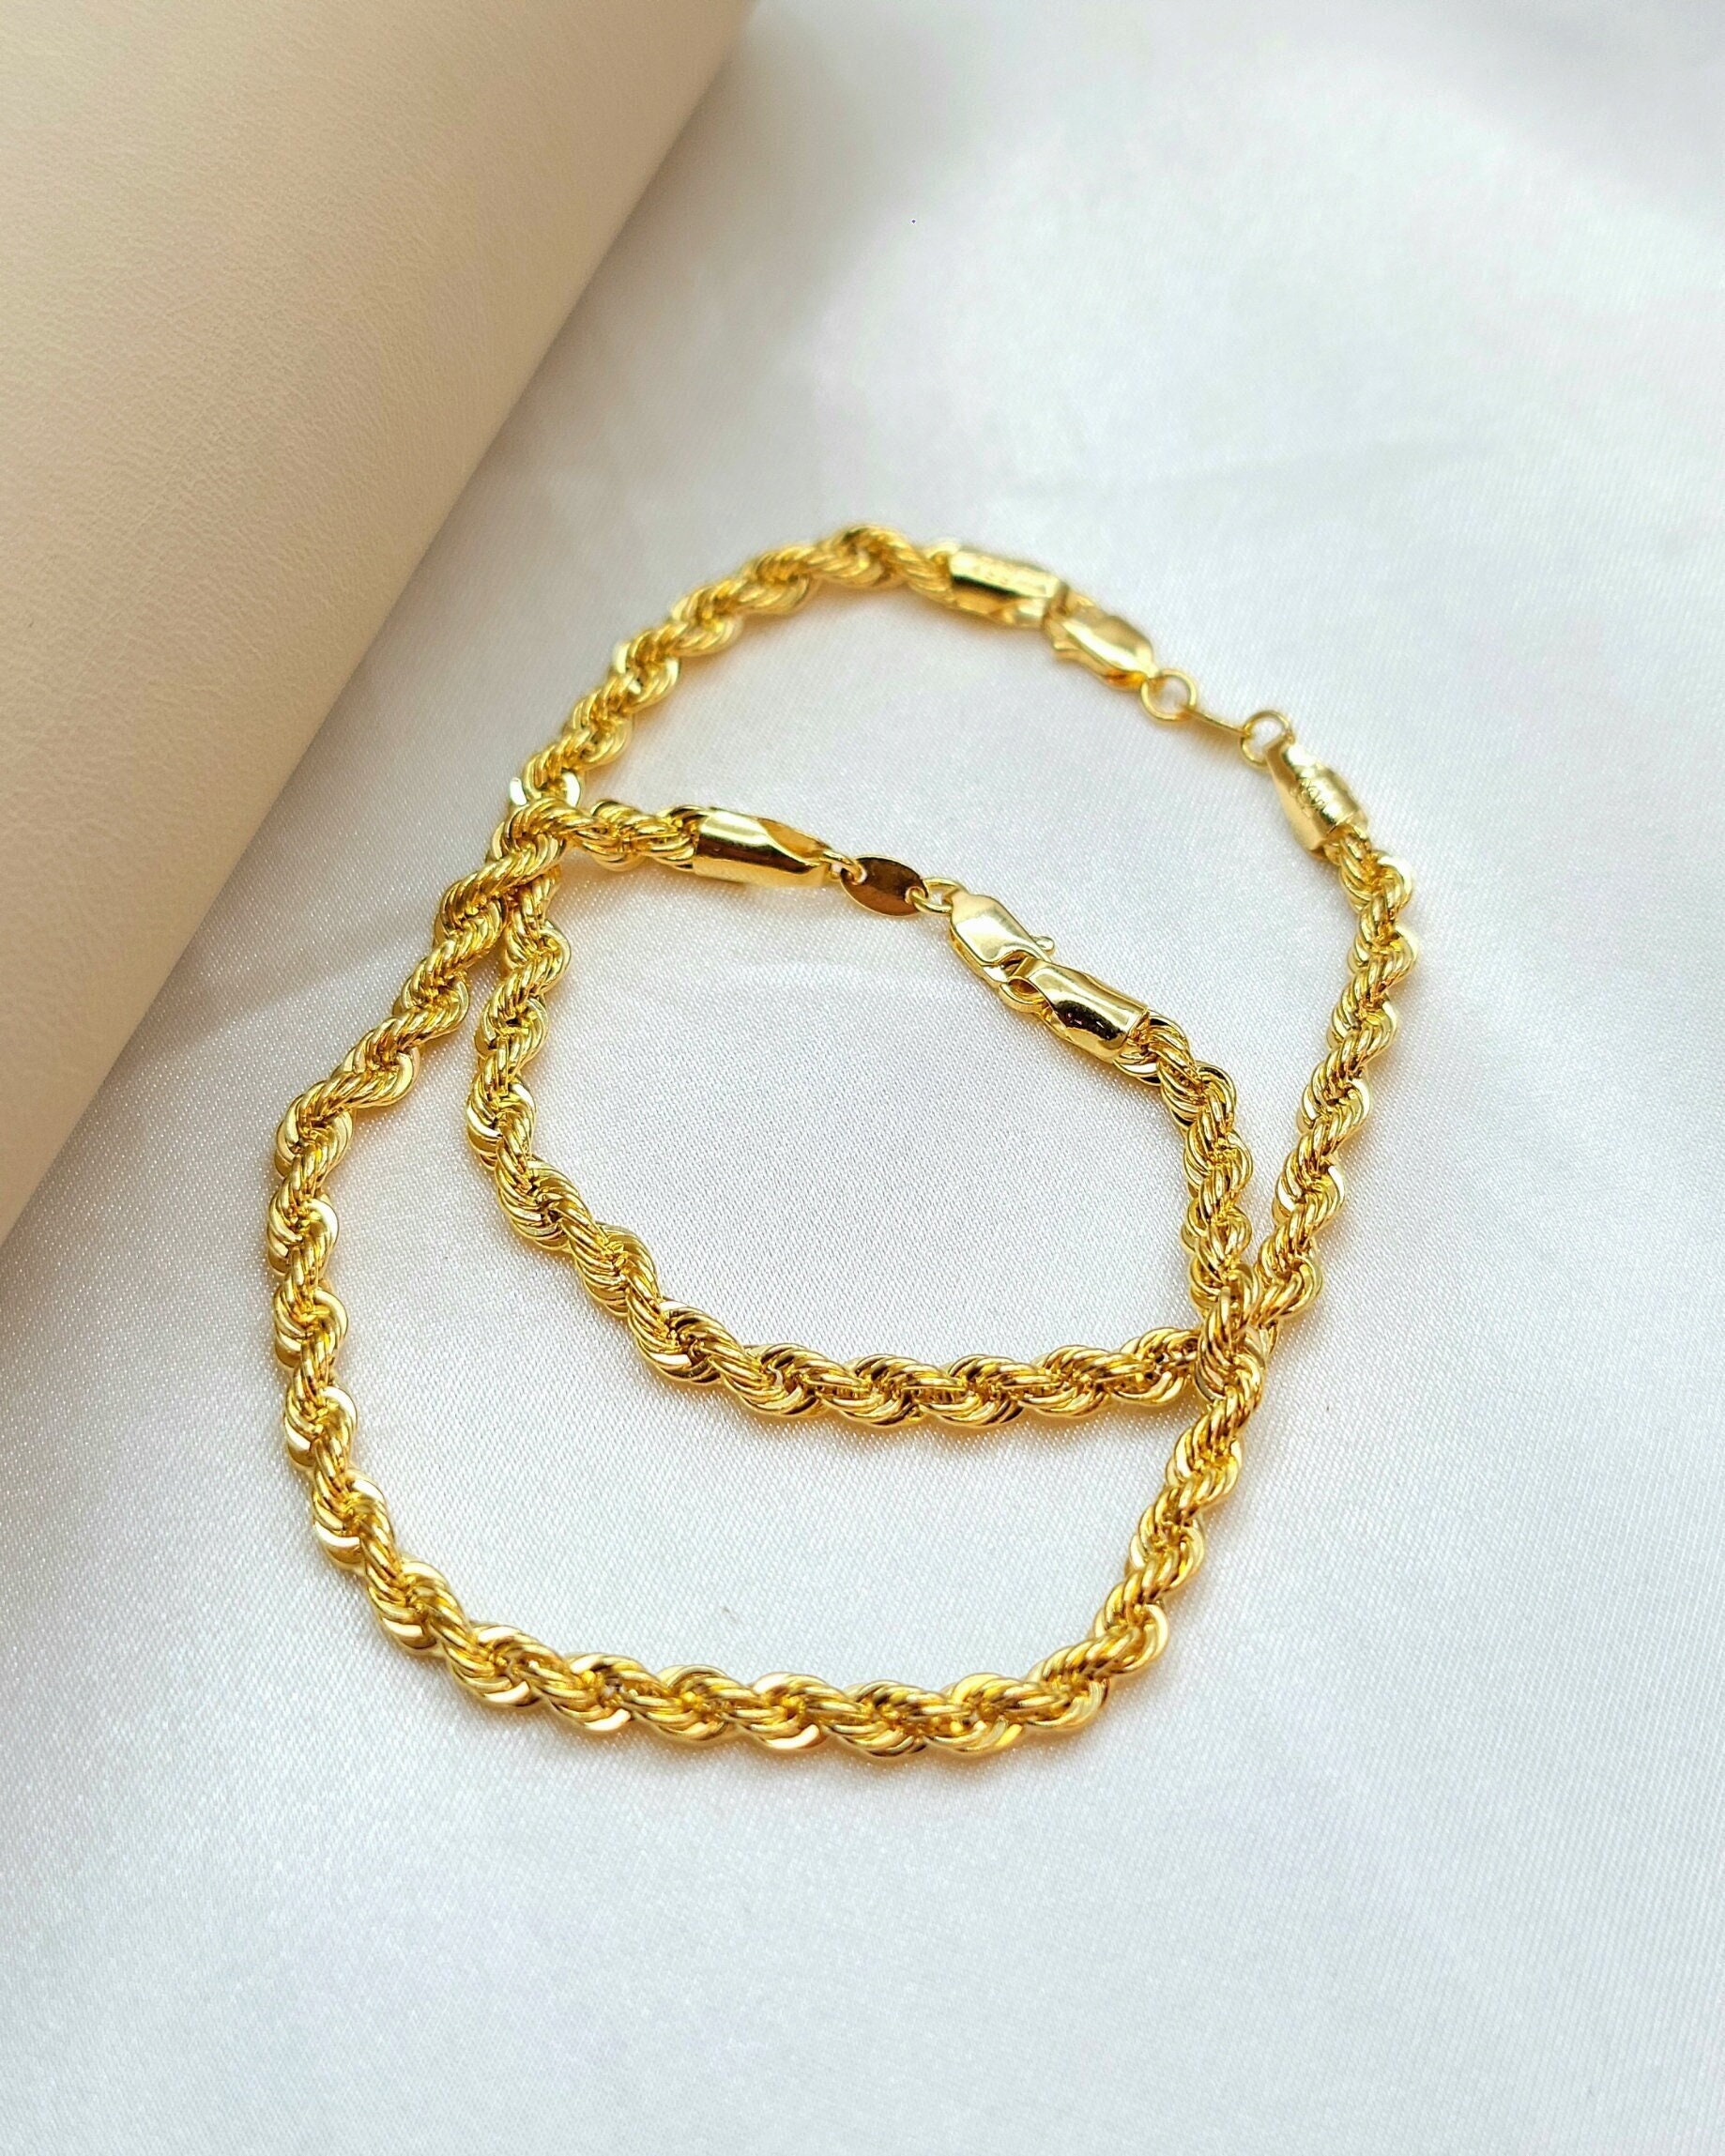 14K Yellow Gold 4.5mm Quadruple Link Rope Bracelet Chain 7: 16465180590131  | Canada